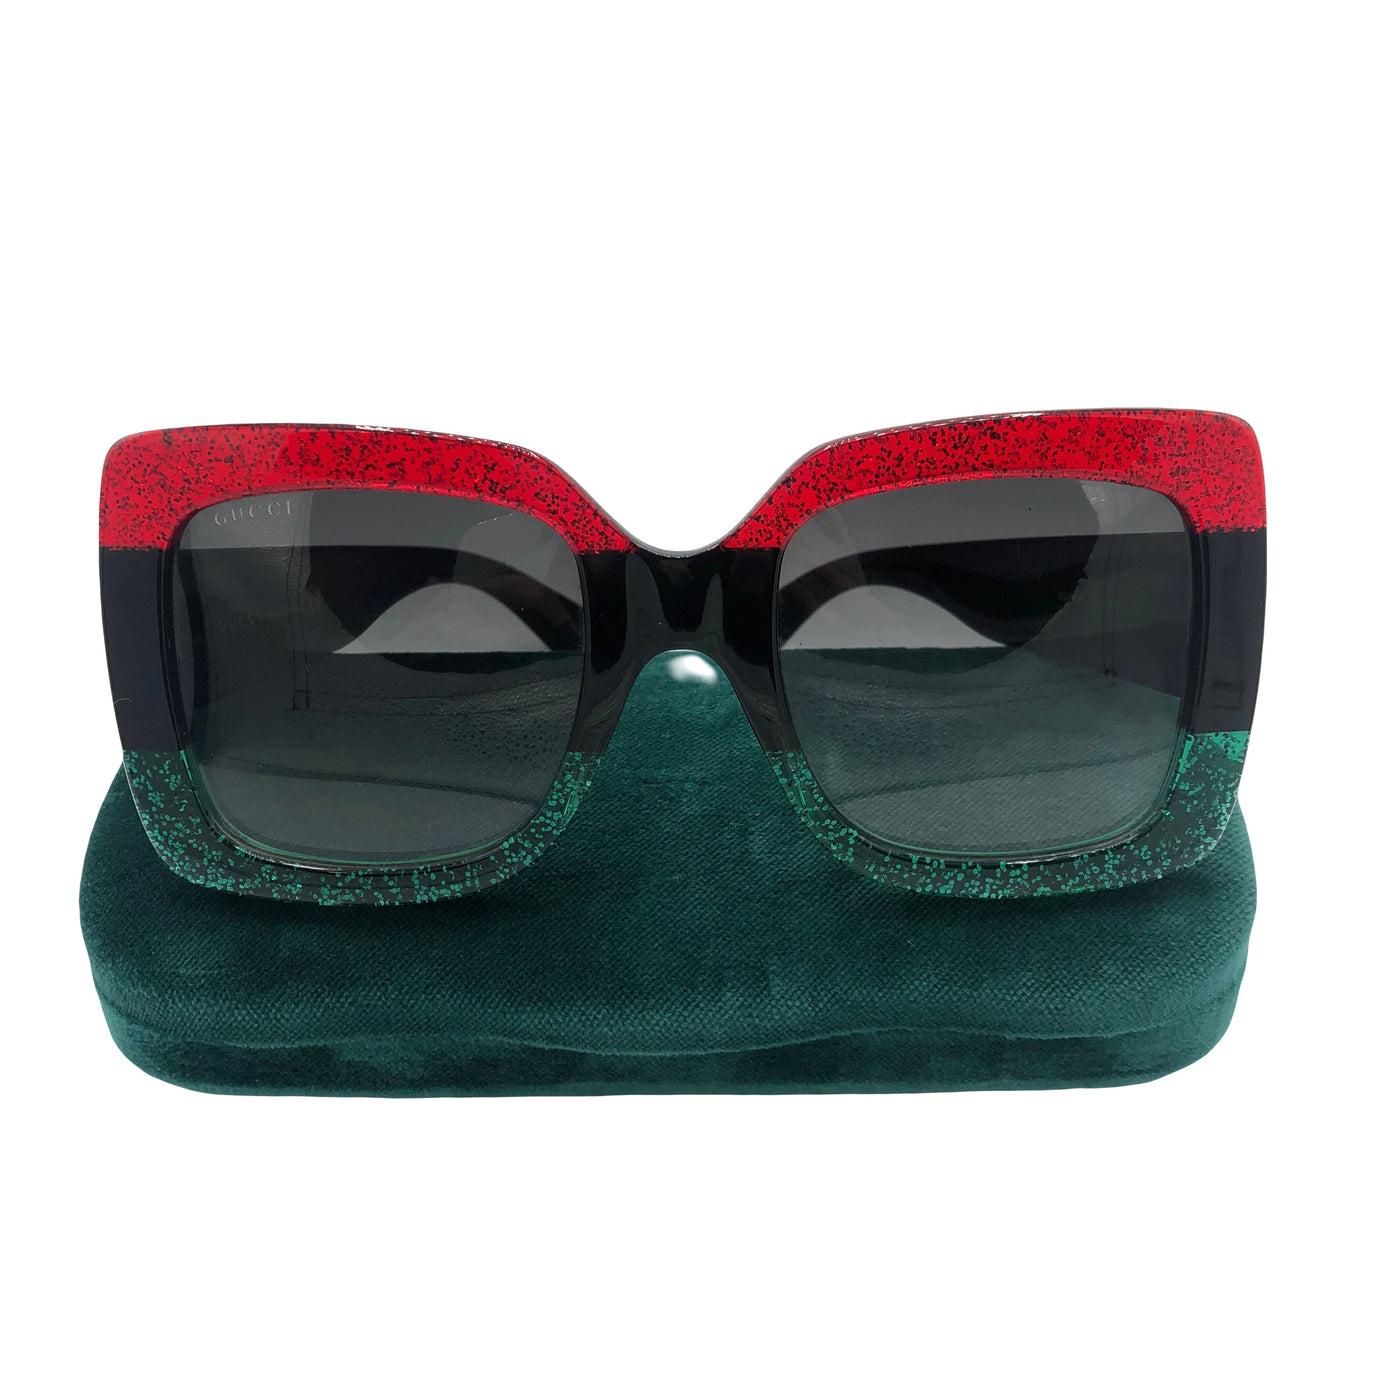 GUCCI oversized glitter red/green sunglasses